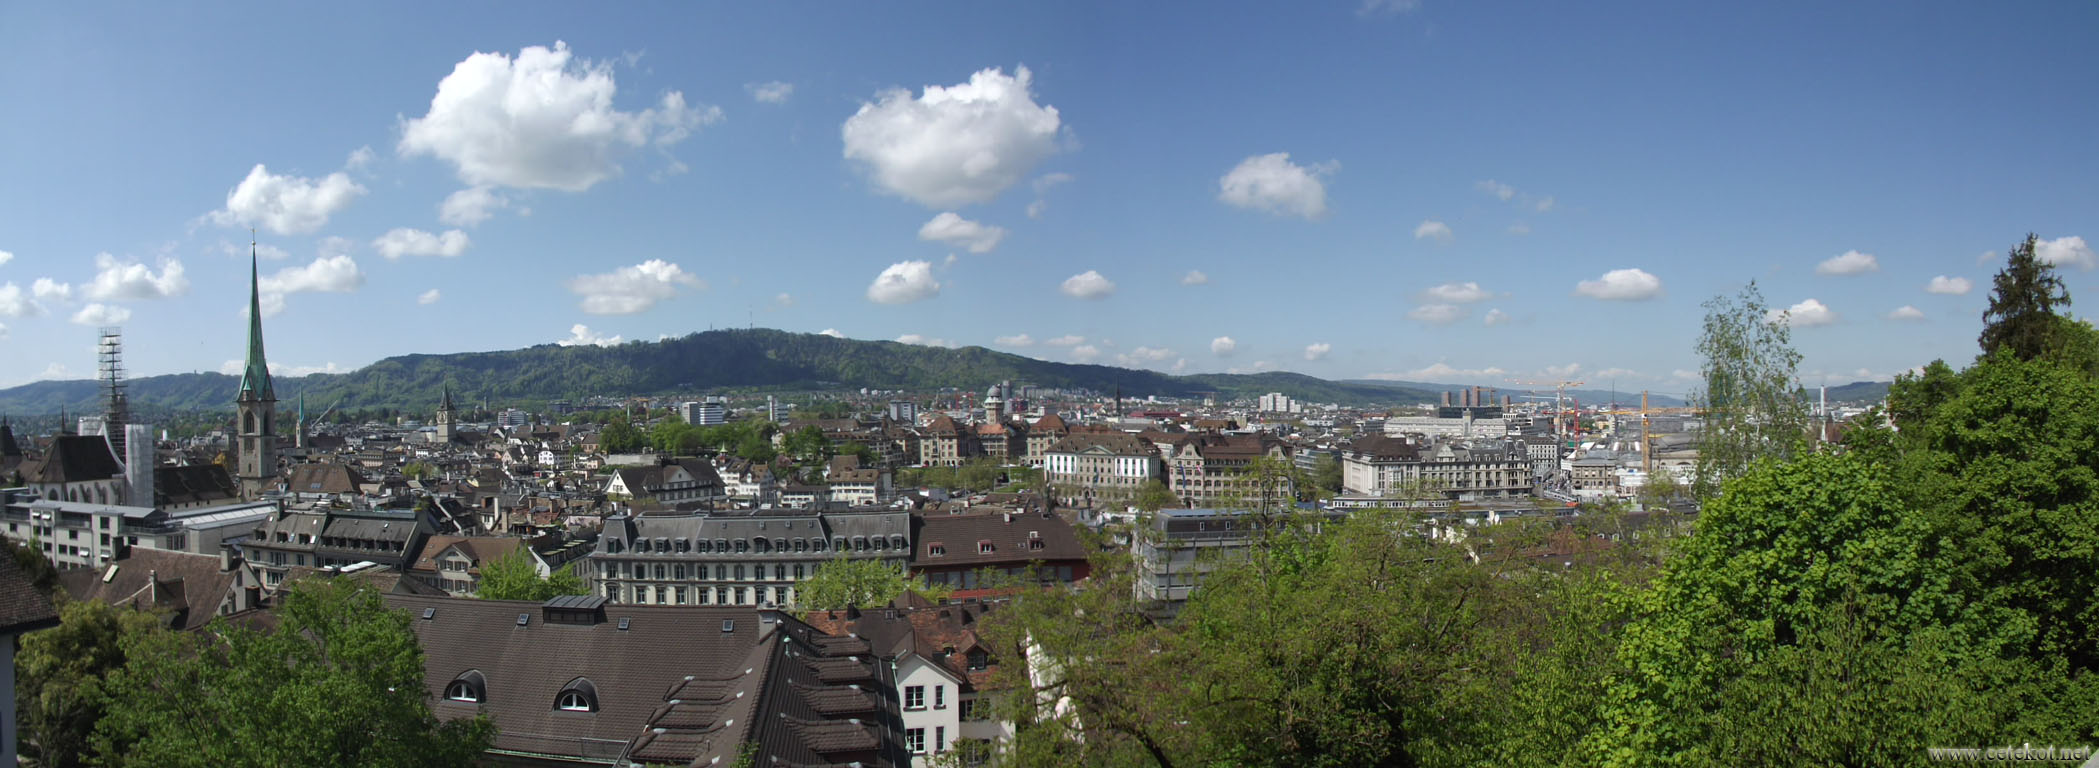 Цюрих: вид с Цюрихберга ( Zürichberg ). Холм вдали - Üetliberg.